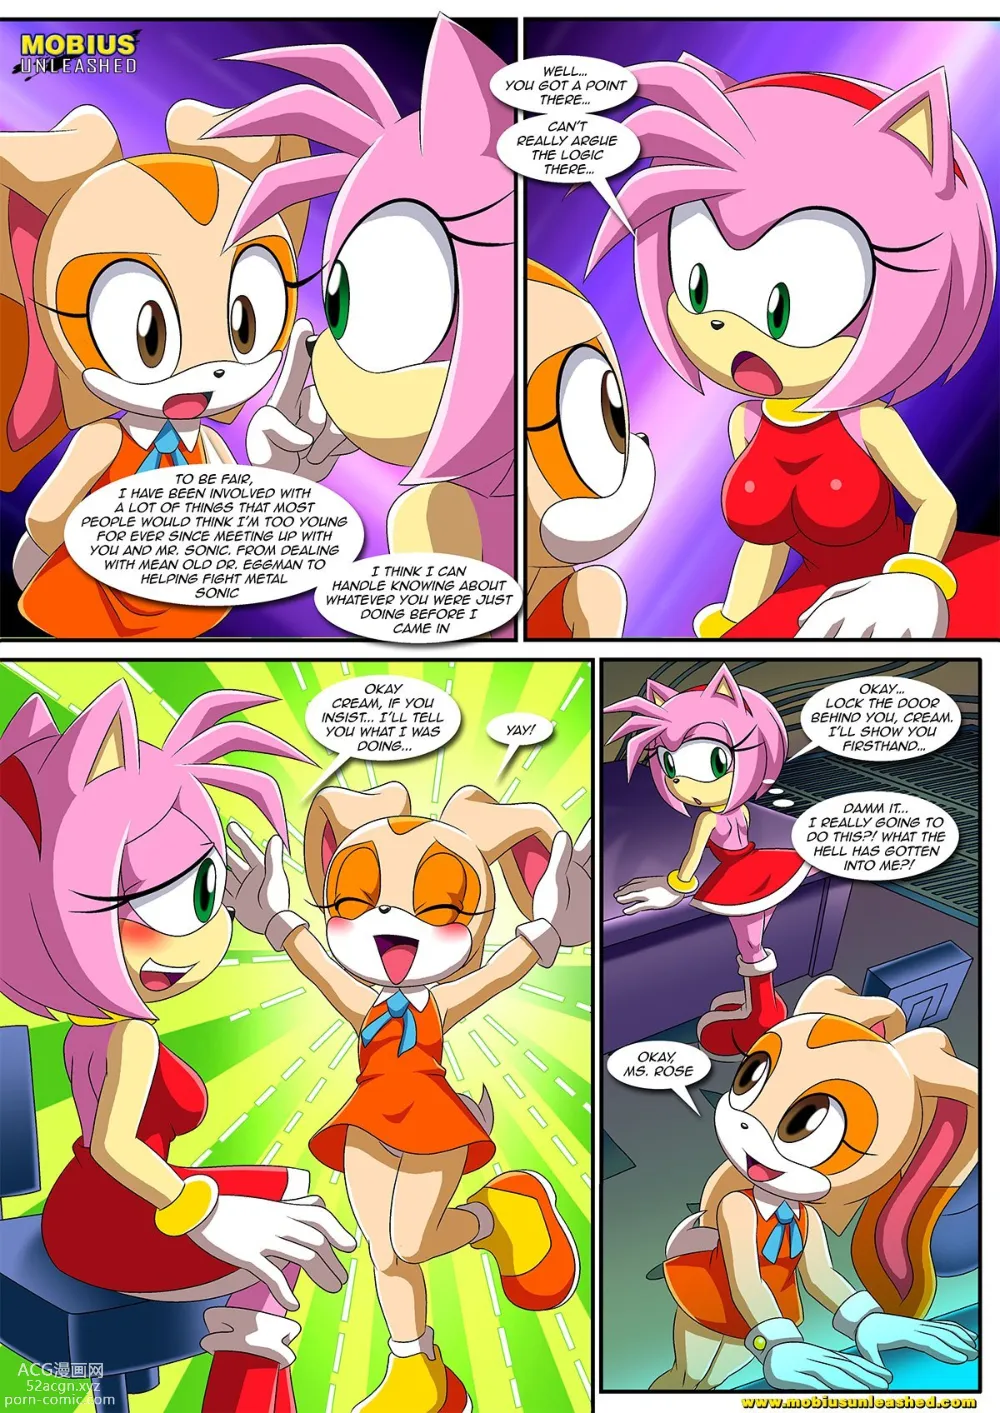 The Mayhem of the Kinky Virus Chapter 2 Sonic the Hedgehog